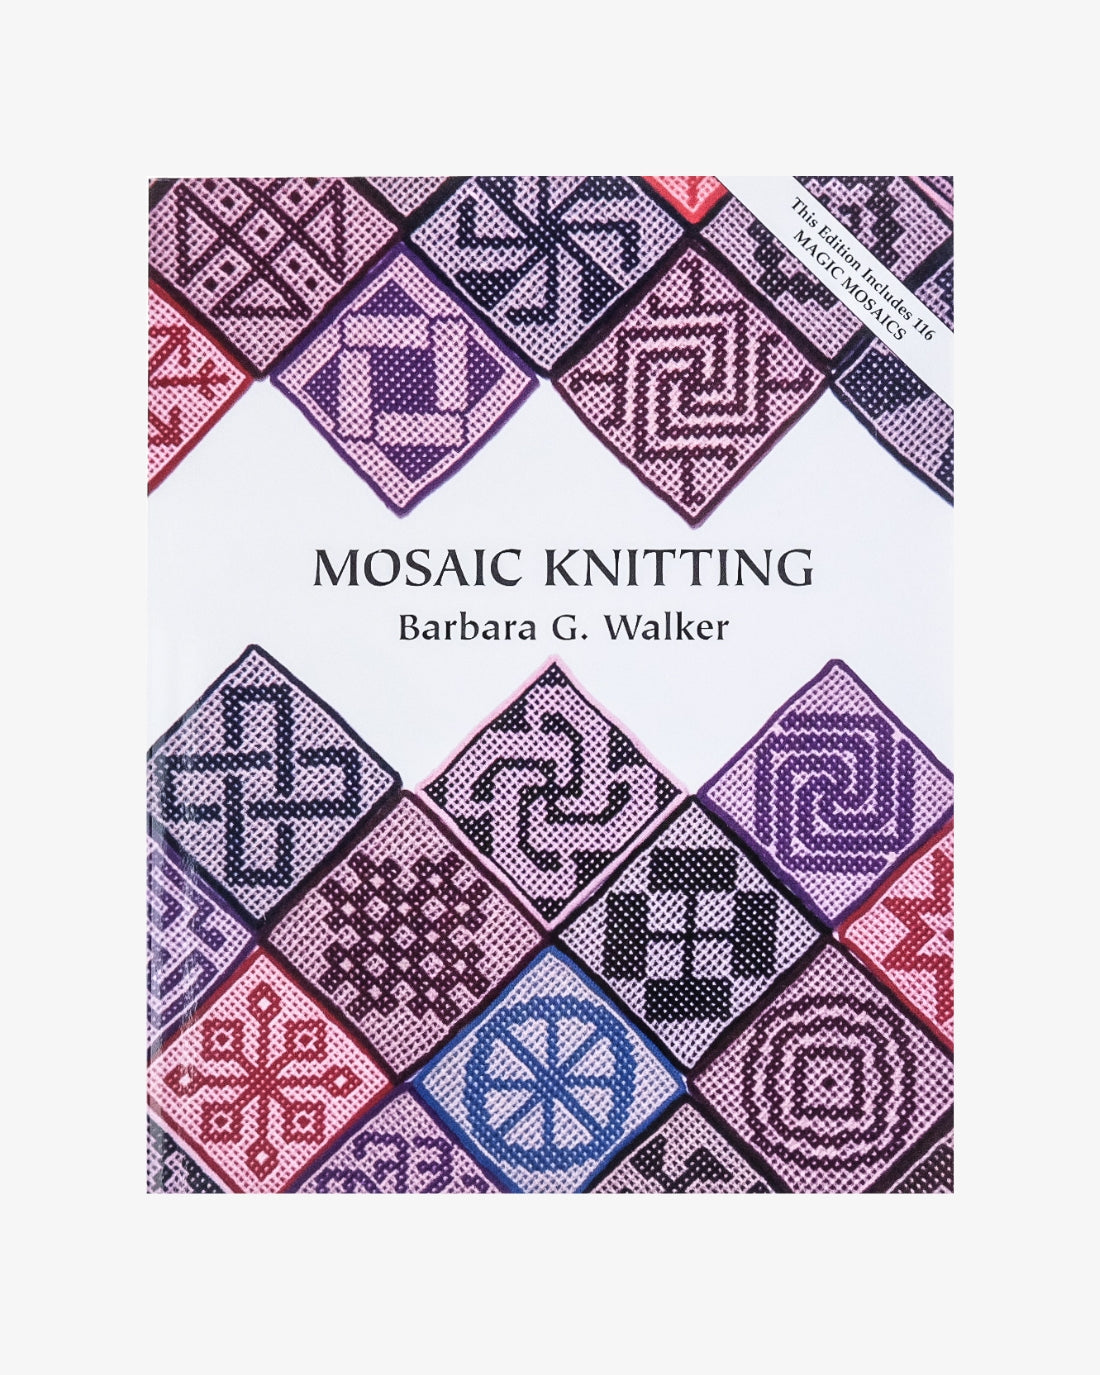 Mosaic Knitting by Barbara G. Walker